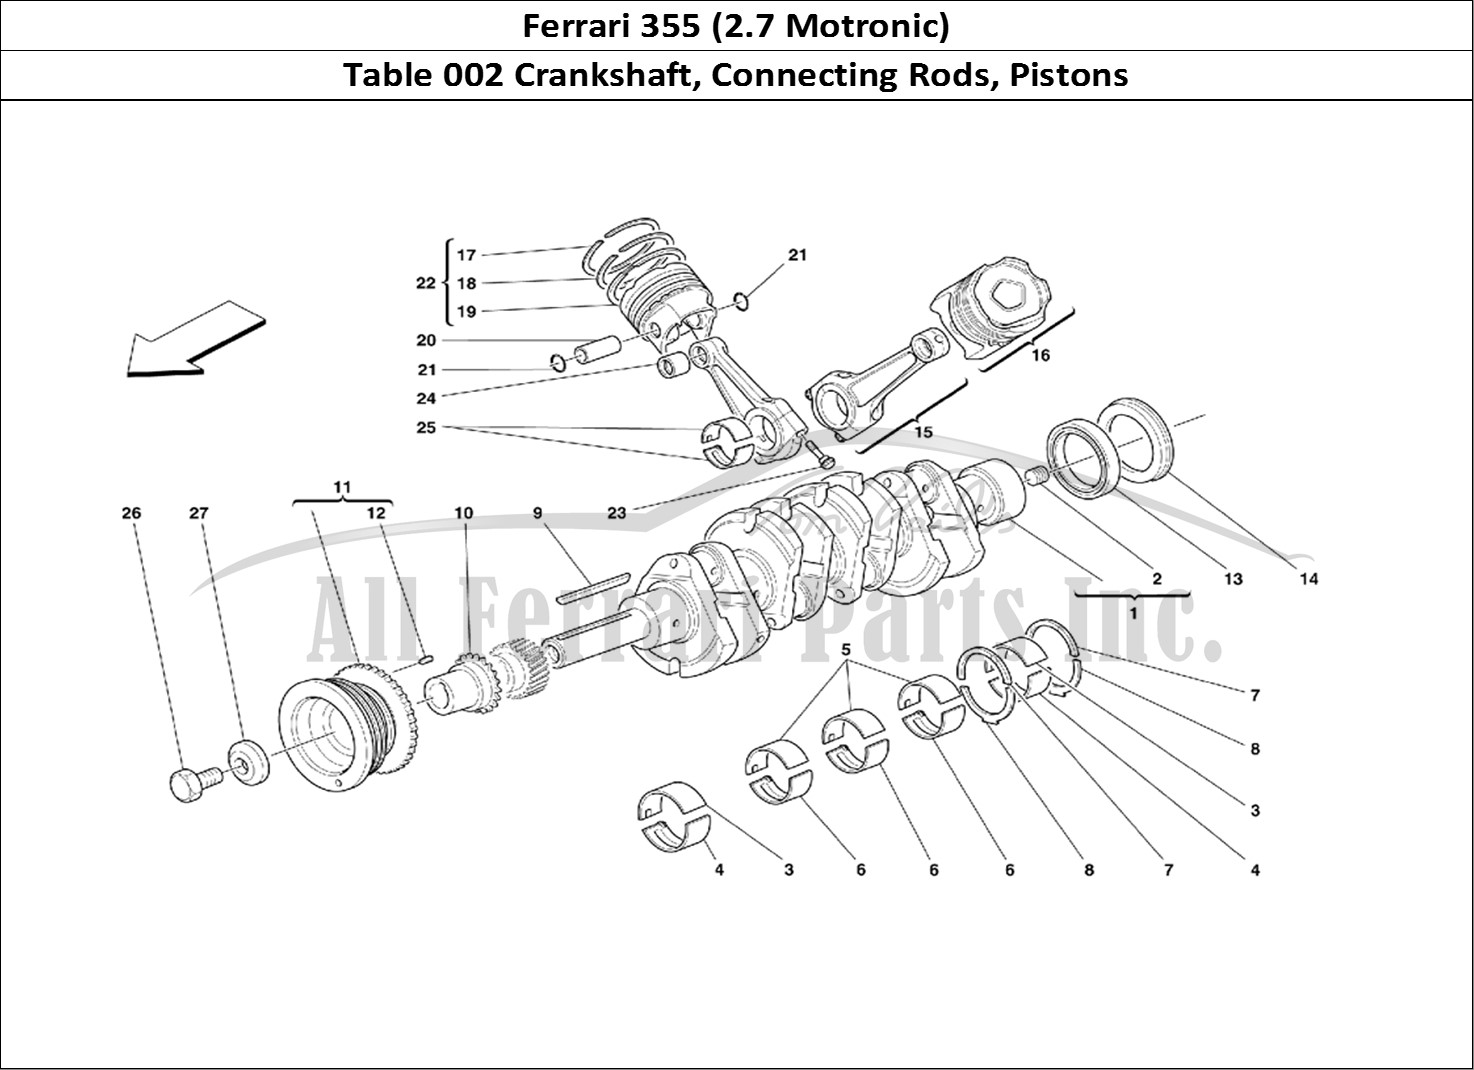 Ferrari Parts Ferrari 355 (2.7 Motronic) Page 002 Crankshaft, Conrods And P